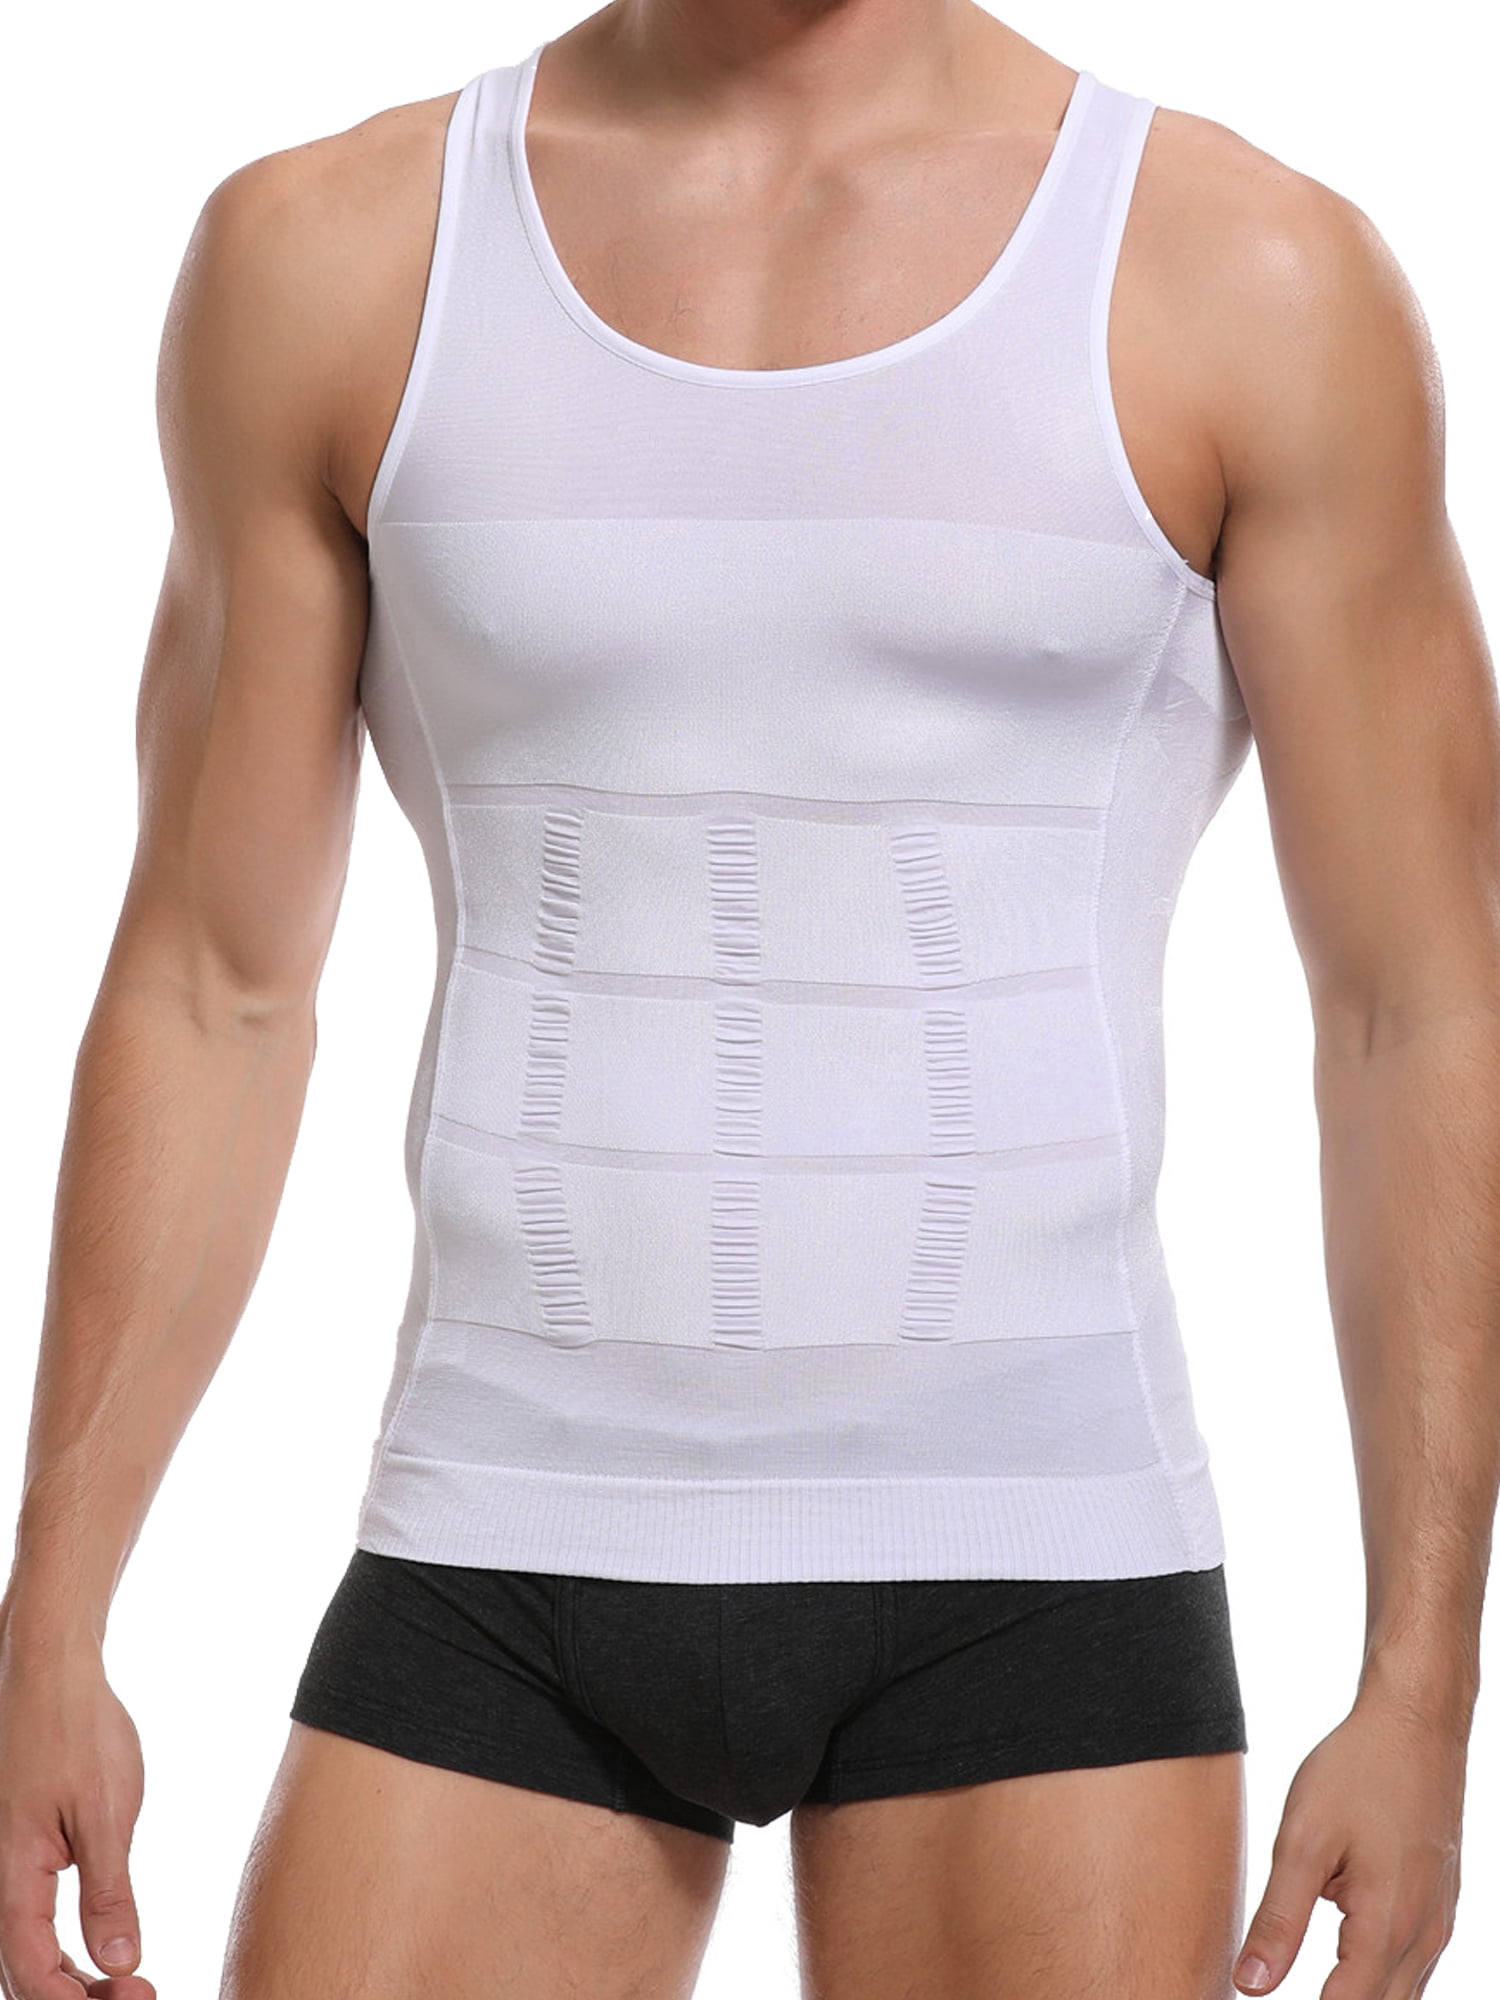 Qric - QRIC Men Slimming Body Shaper Vest Chest Compression Shirts Abs ...